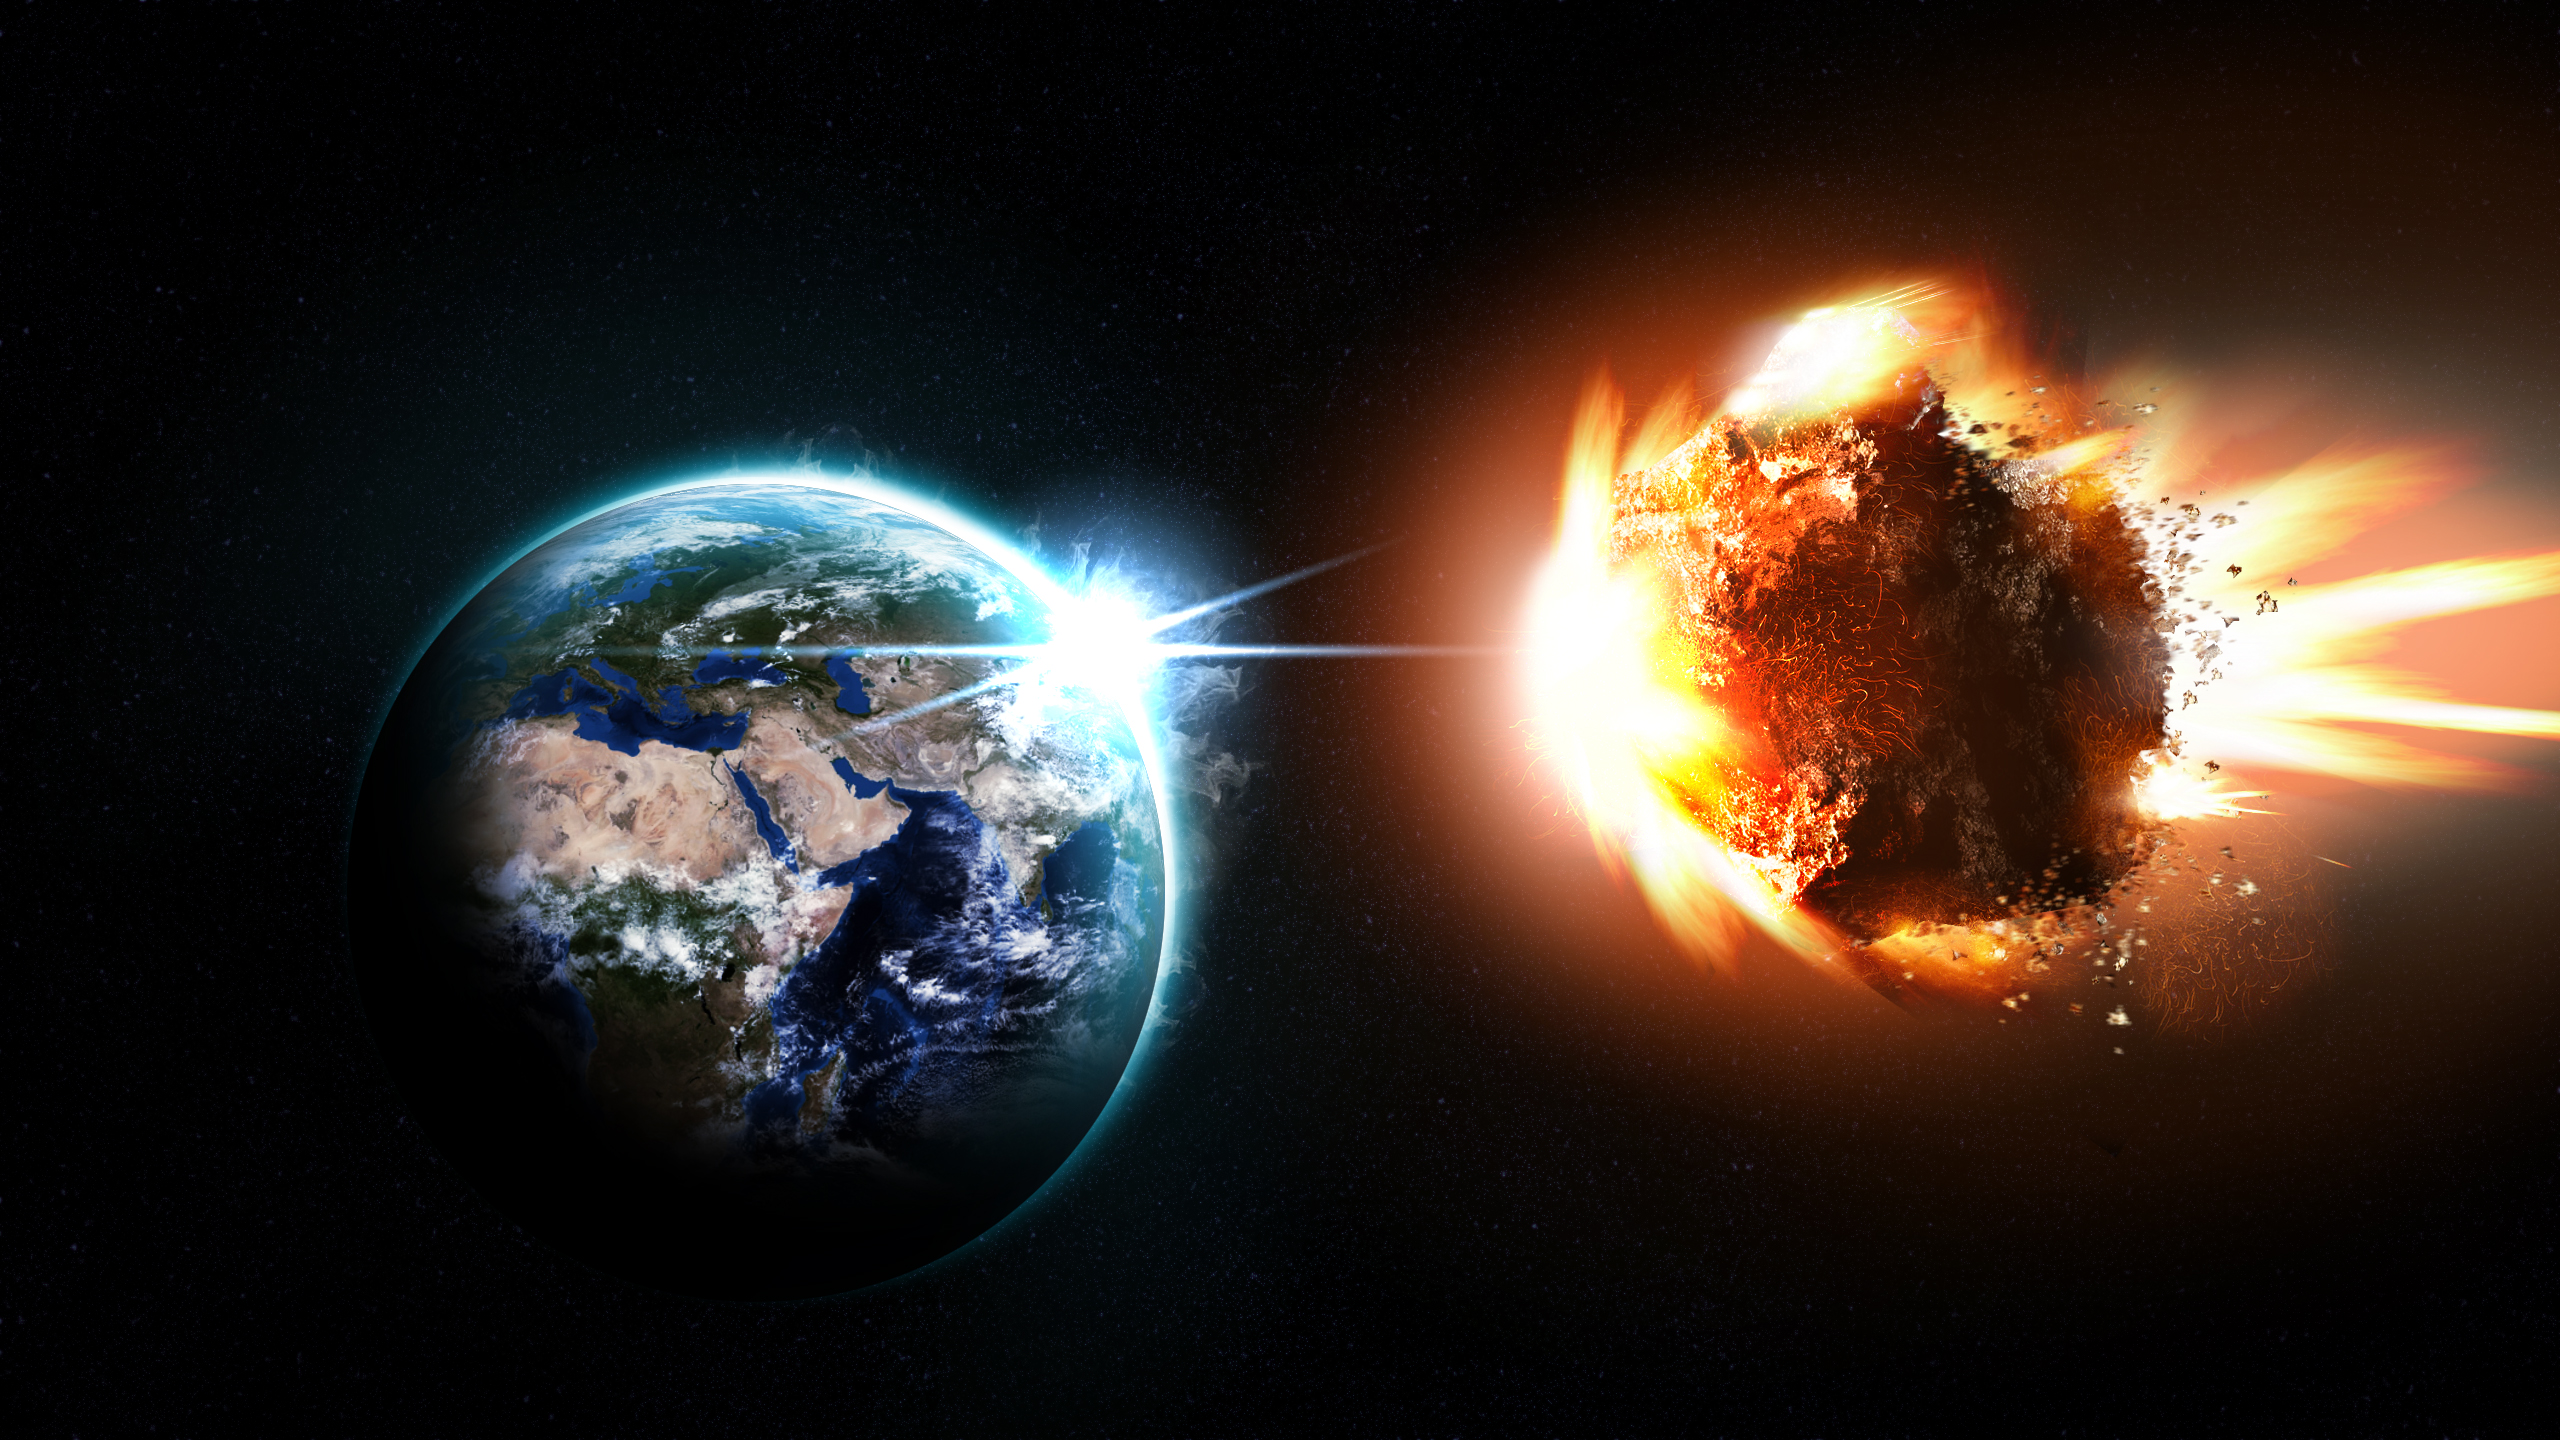 Конец света планета. Кометы астероиды метеориты. Взрыв планеты земля. Метеорит врезается в землю. Столкновение метеорита с землей.